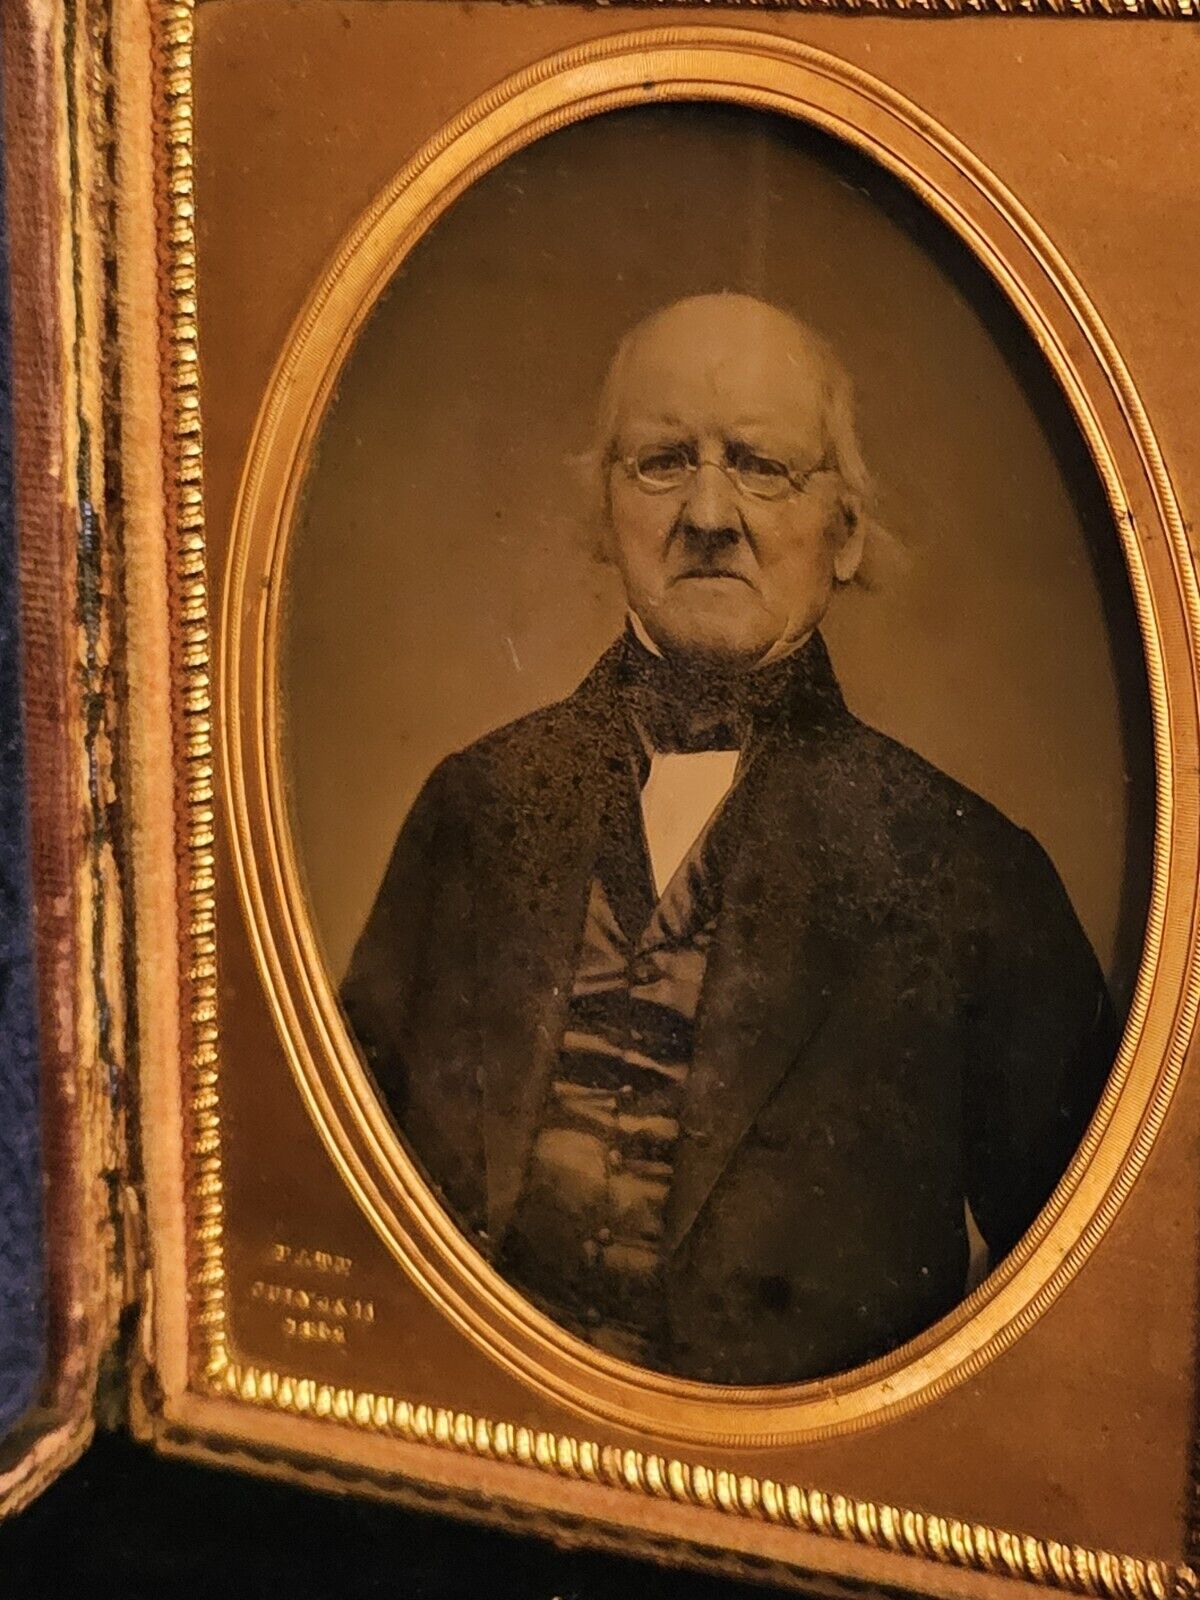 Antique photograph Ambrotype 1854 of An Older Gentleman 